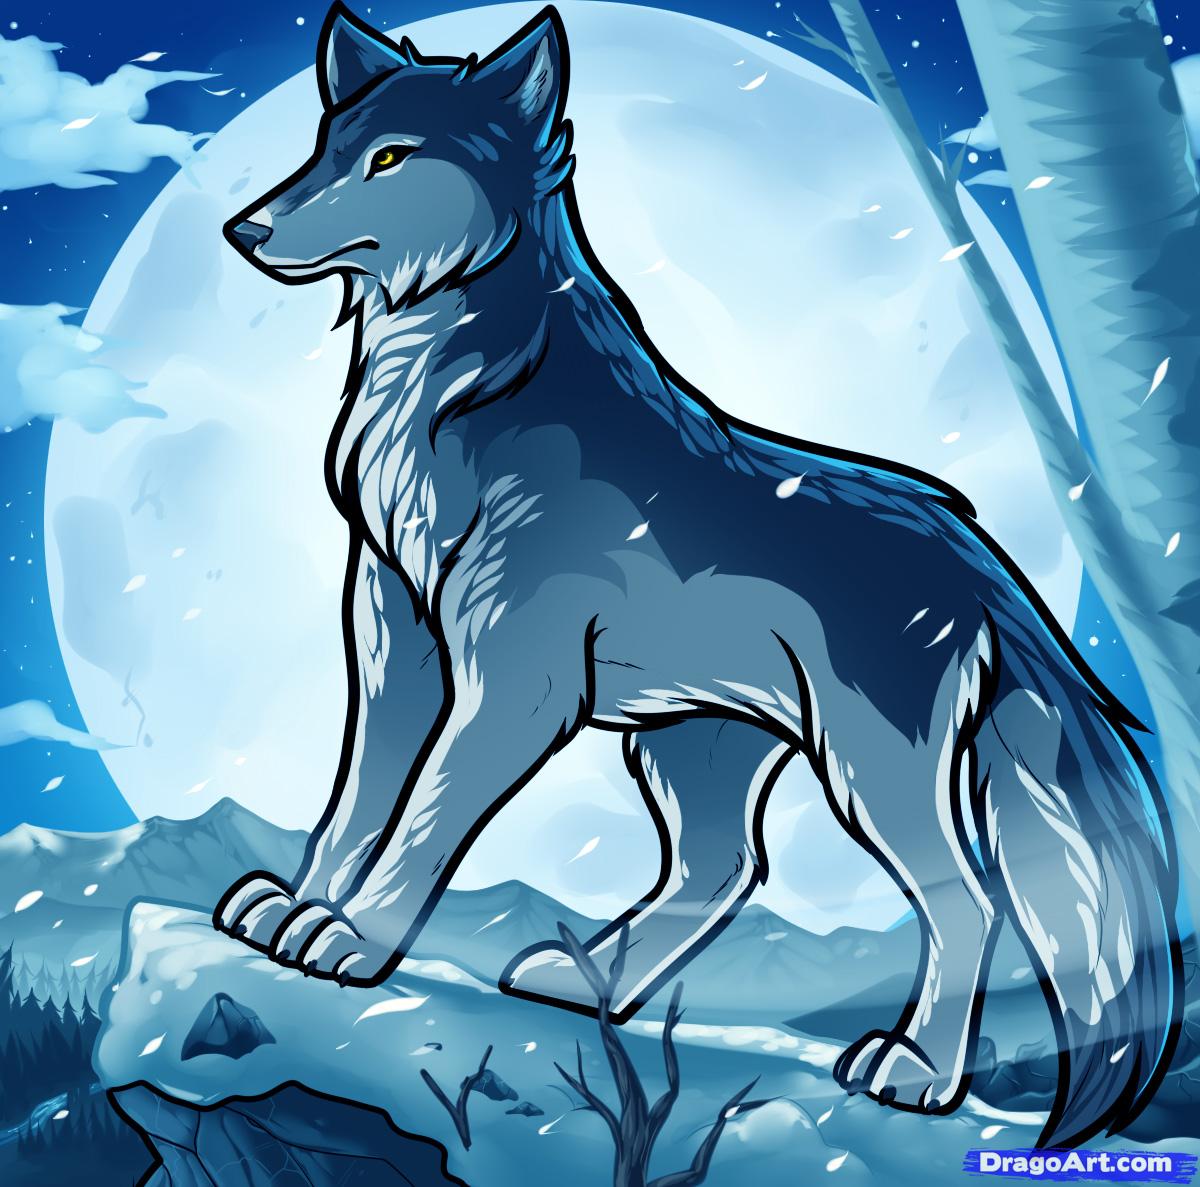 Jake the anime wolf - Anime Wolves Photo (36394958) - Fanpop